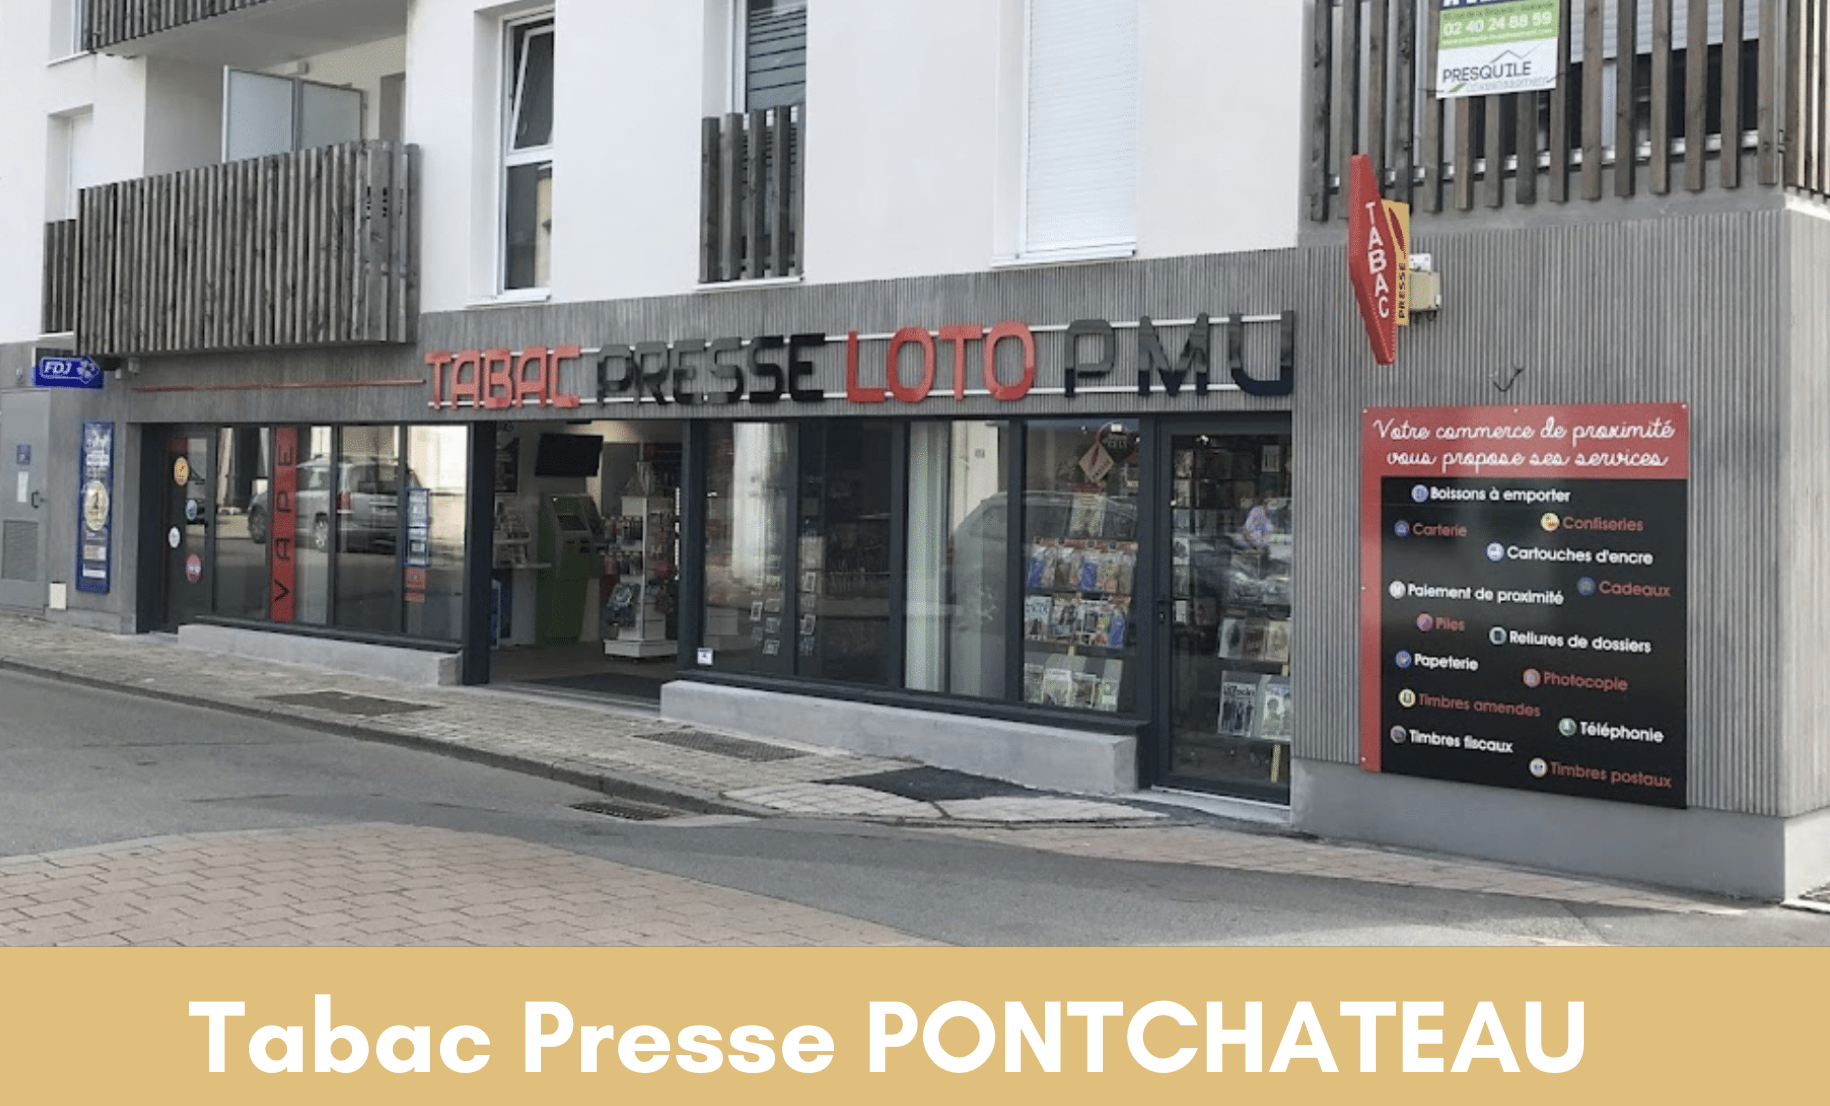 TABAC PRESSE LOTO PMU: Pontchateau